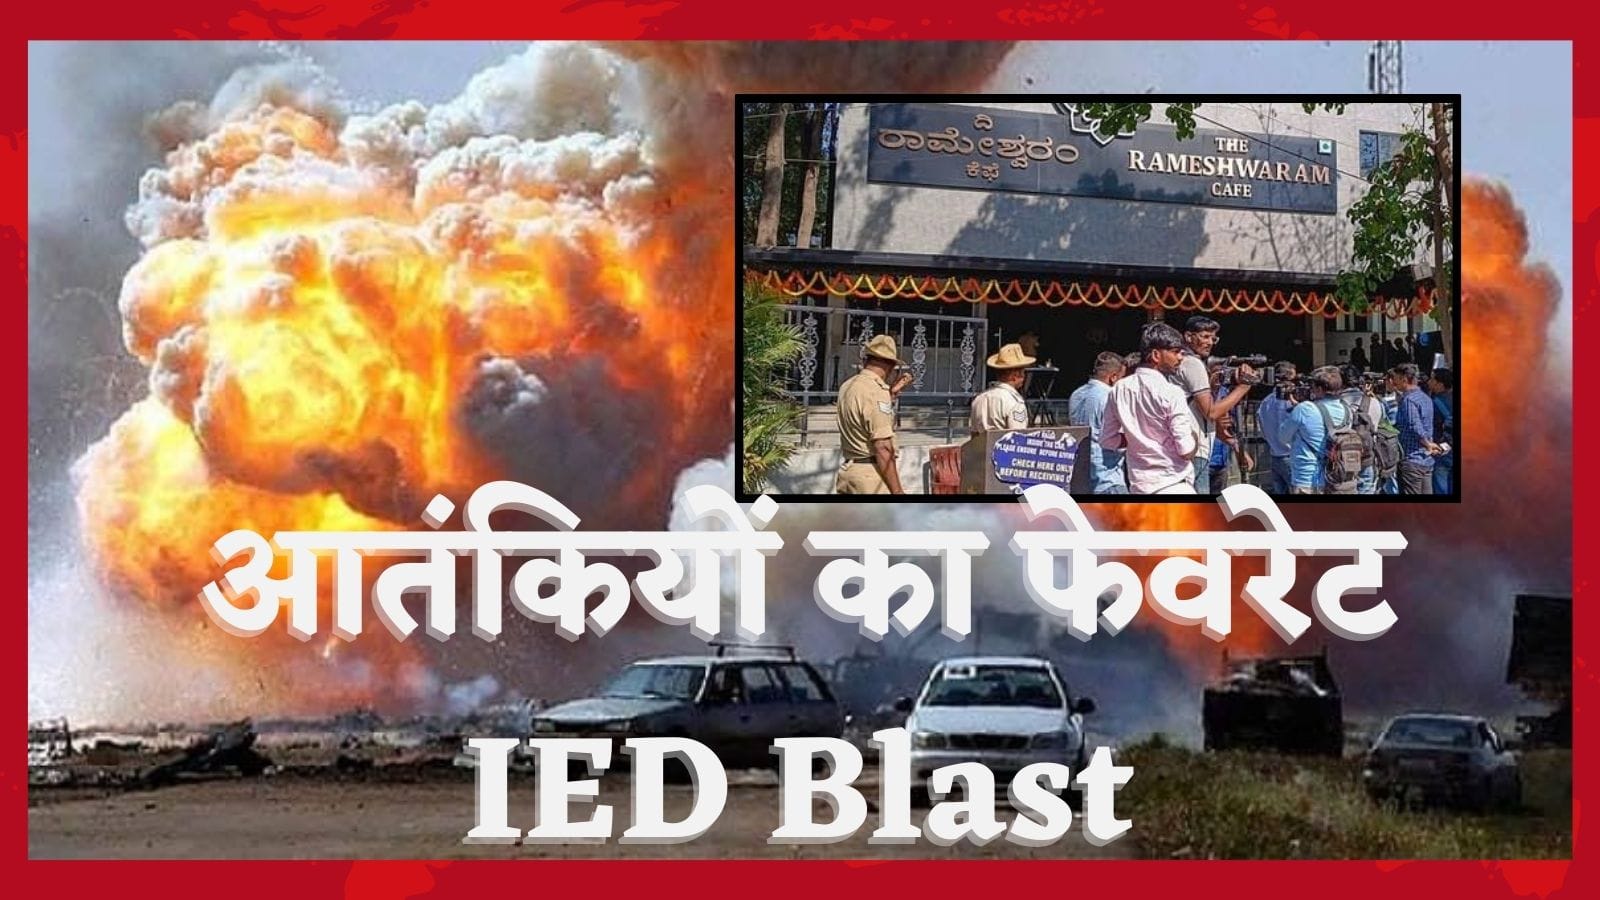 IED blast kya hota hai? (what is IED blast)